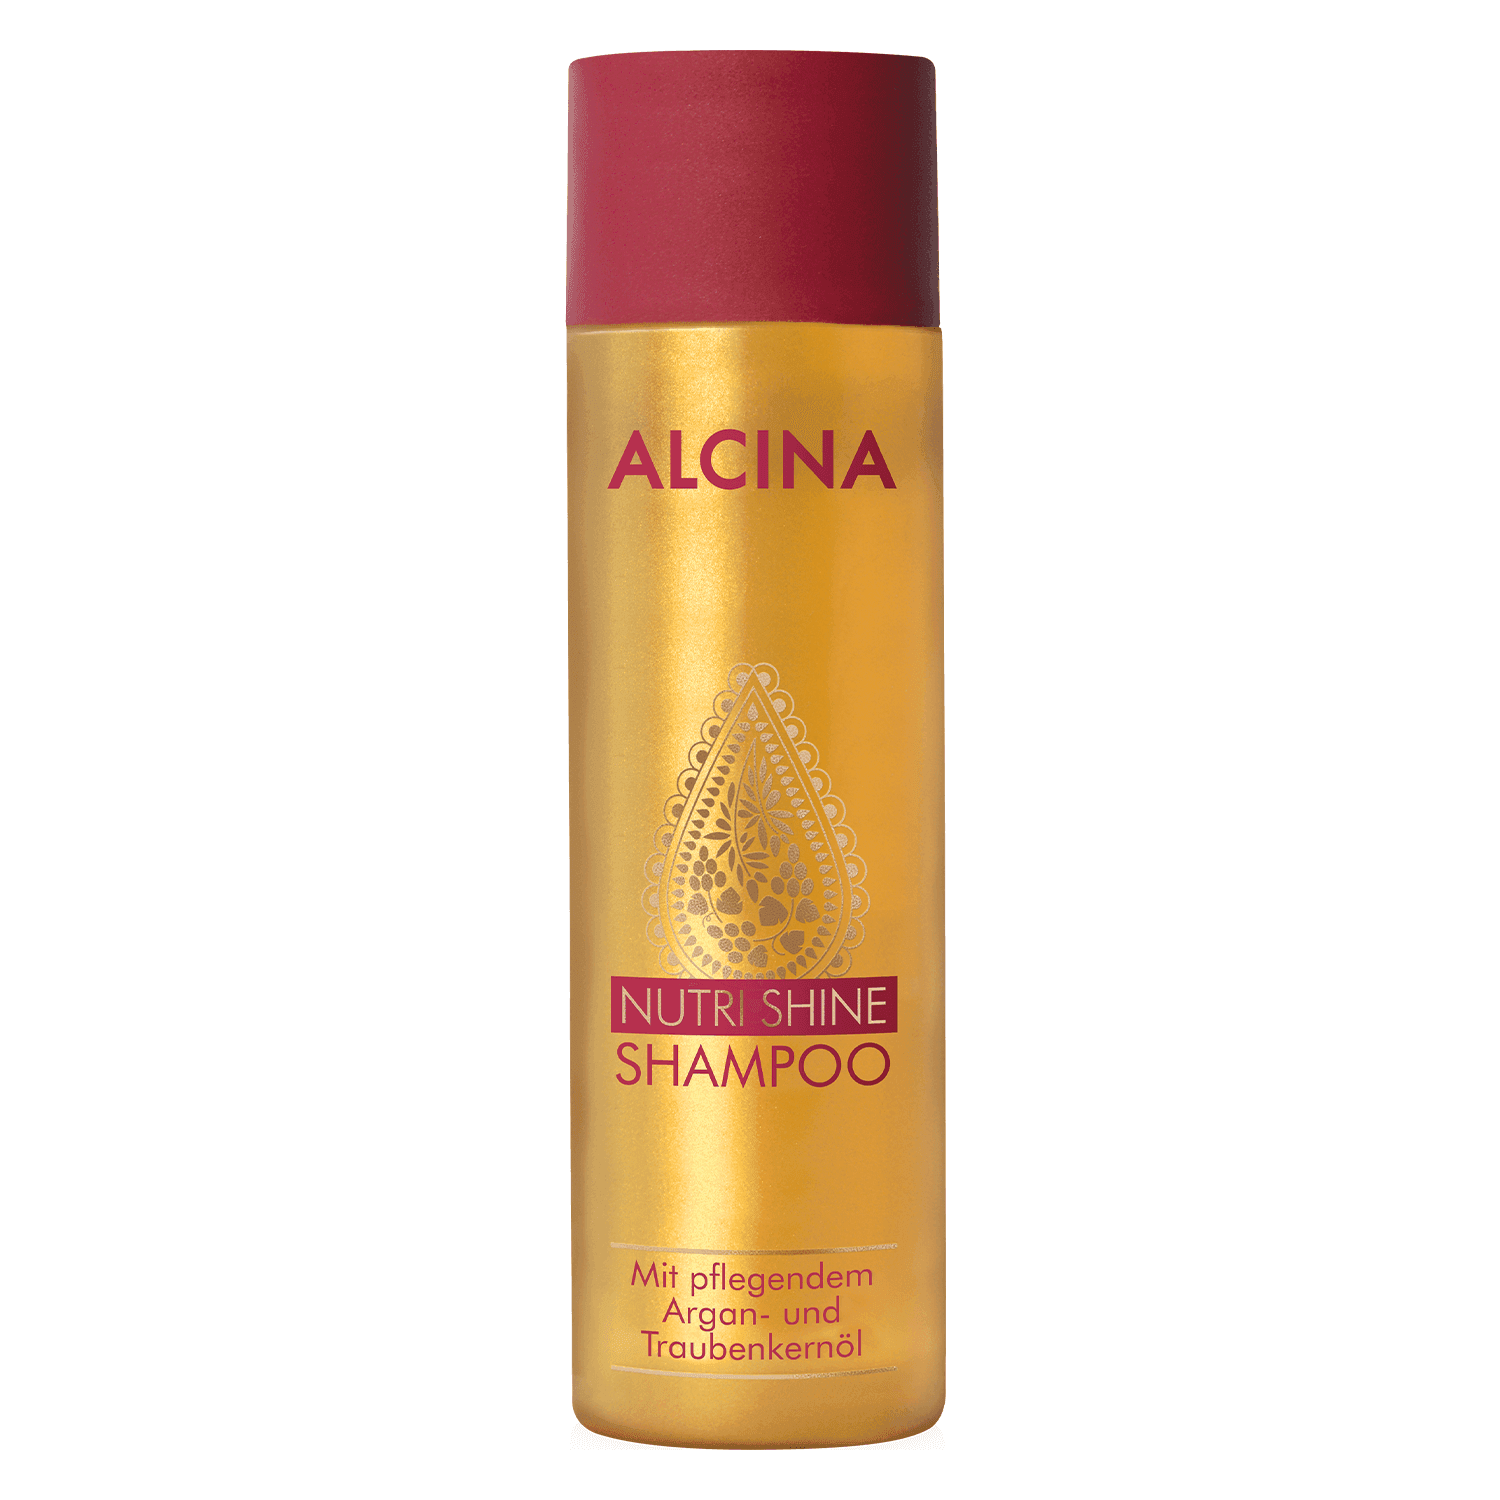 Alcina Nutri Shine - Shampoo